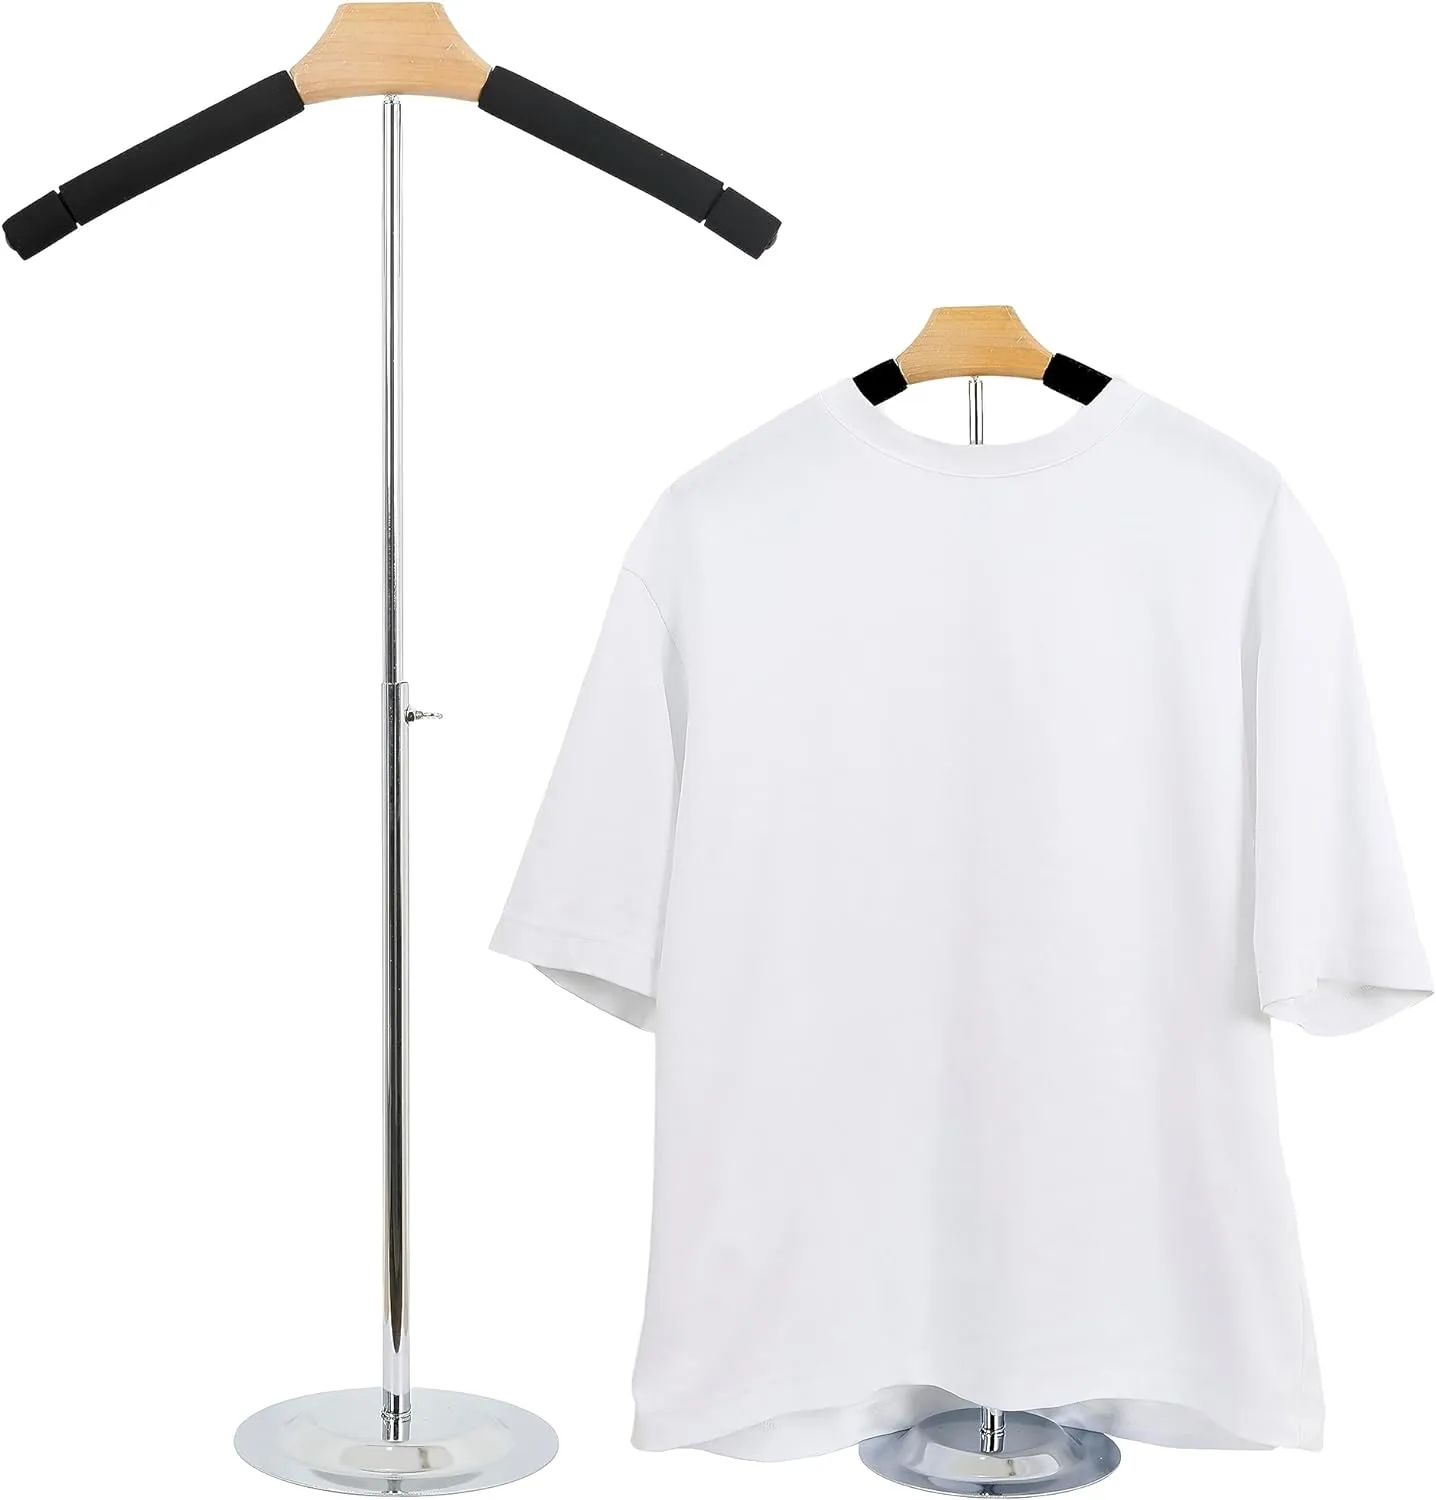 Adjustable T-Shirt Display Stand - Portable Black Metal Clothes Hanger Rack for Shirts, Coats